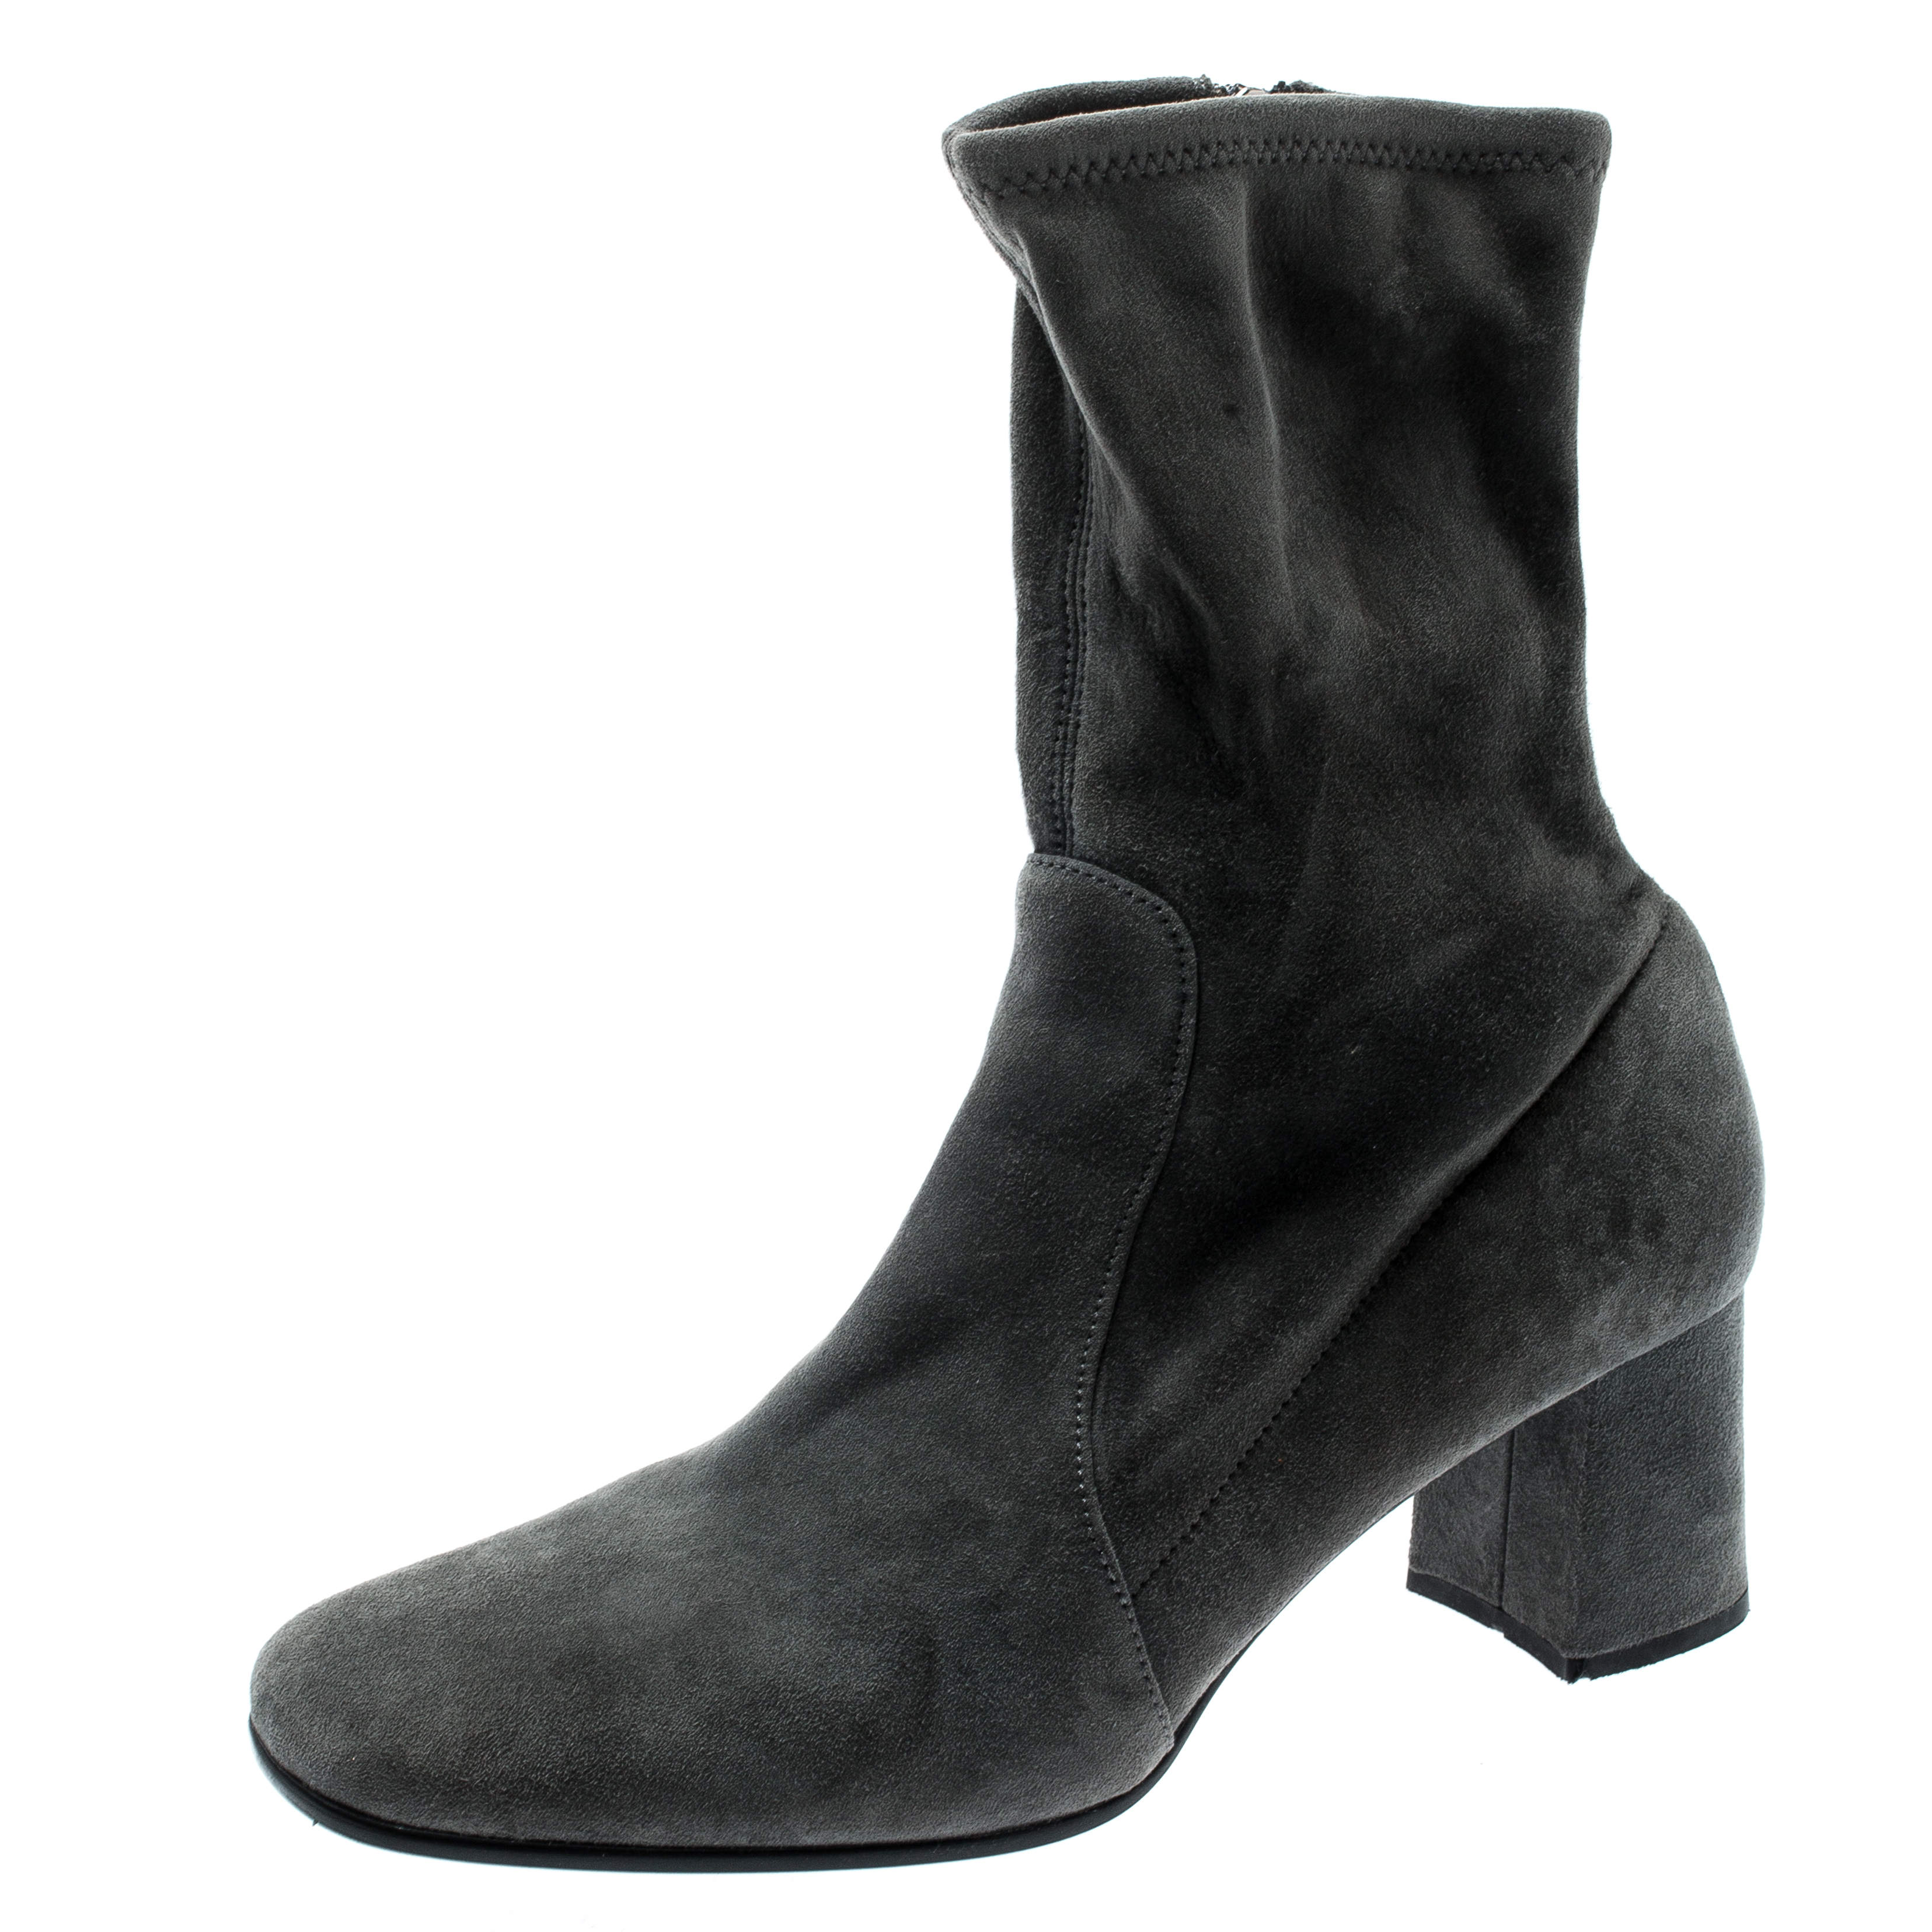 Prada Grey Suede Block Heel Ankle Boots Size 39